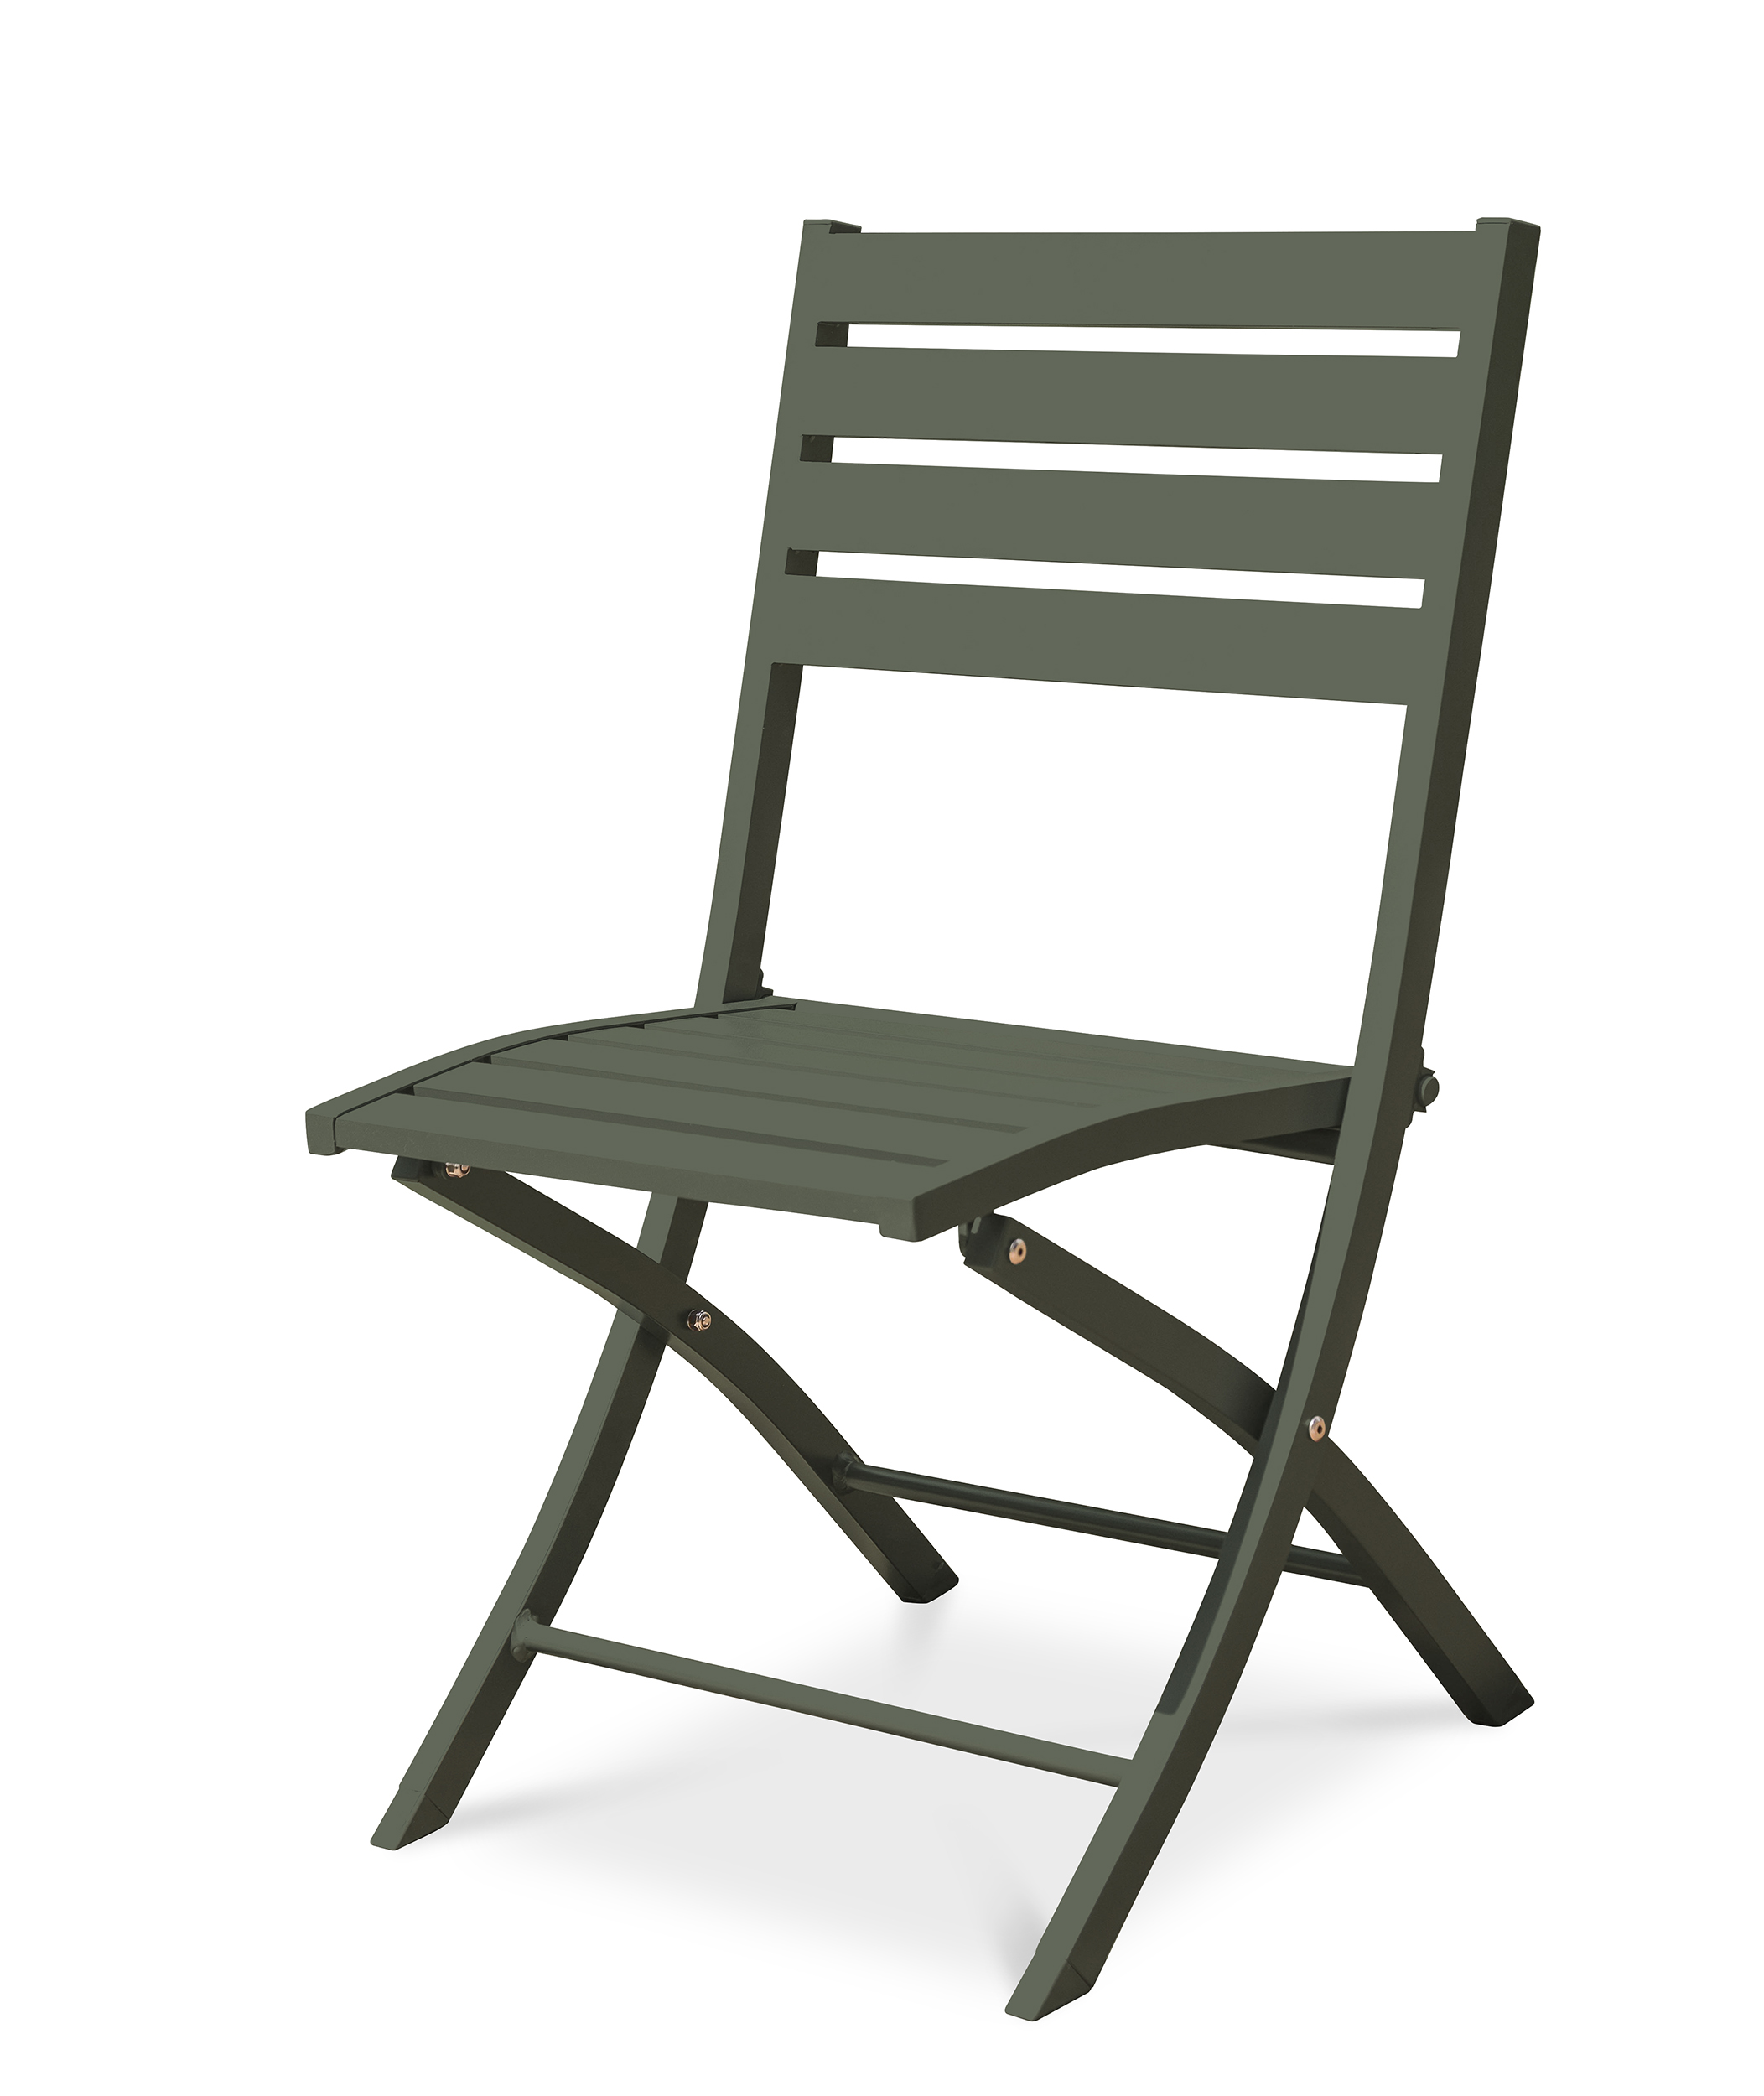 Chaise de jardin pliante en aluminium vert kaki